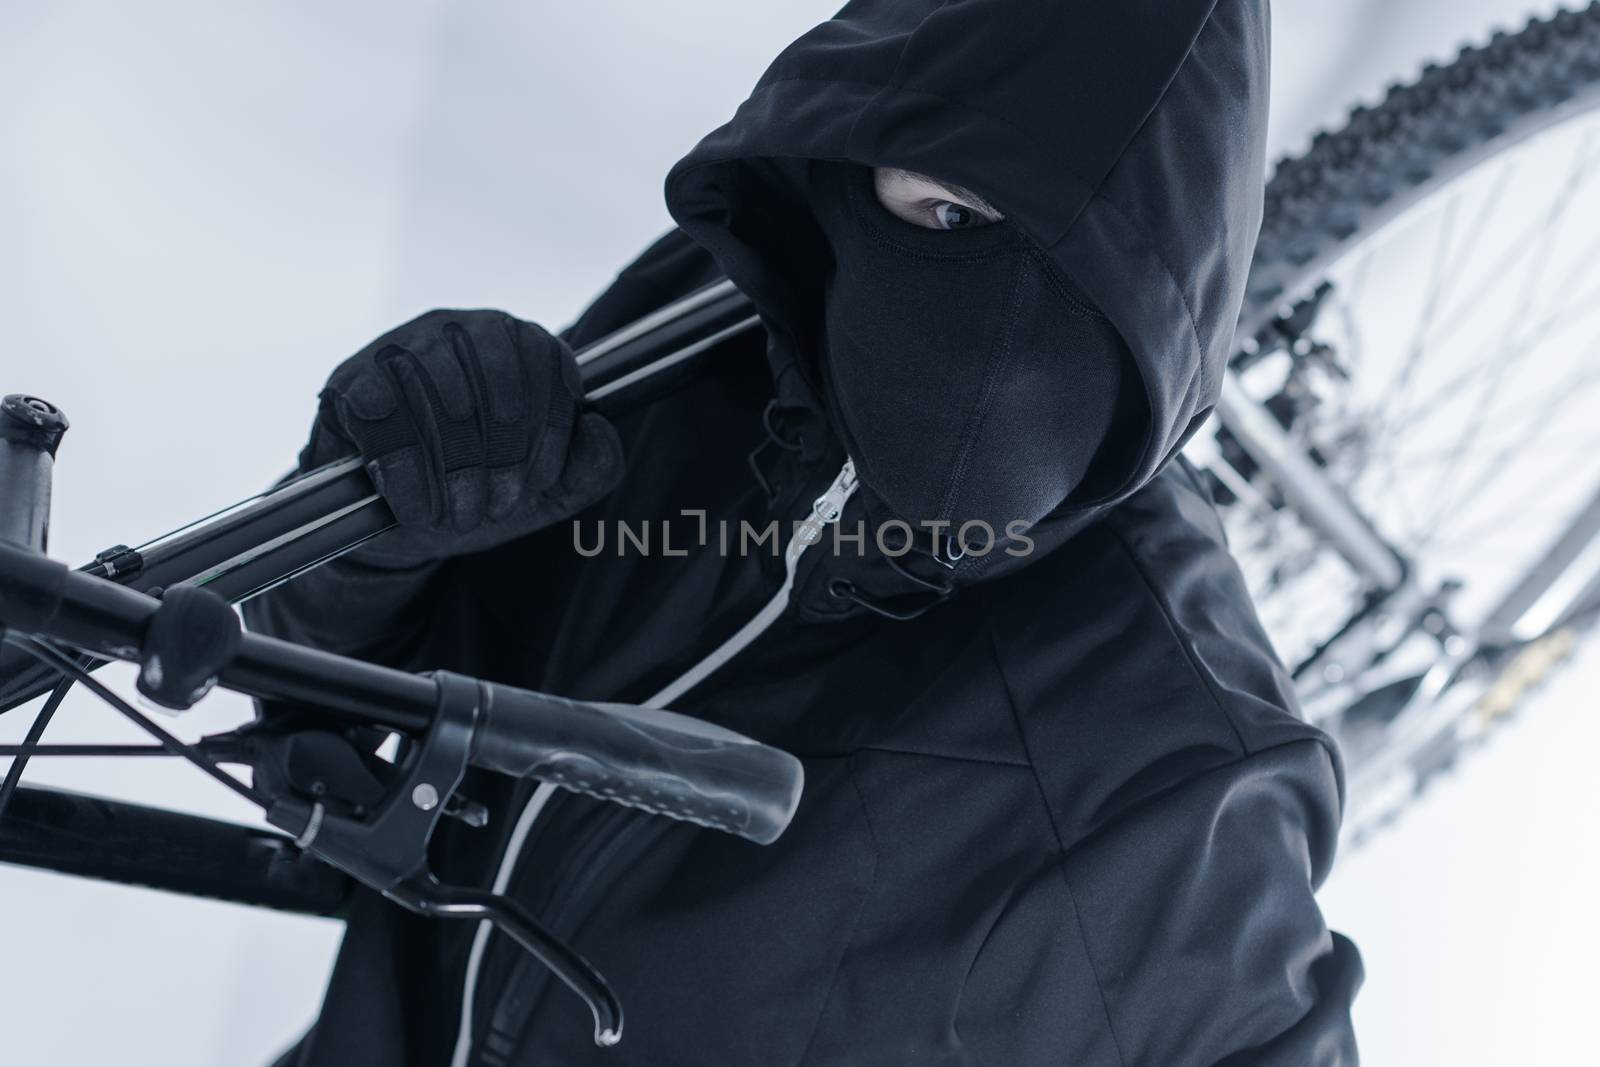 Bike Theft. Bike Thief in a Hood, Black Mask and Black Gloves. Caucasian Male Thief.